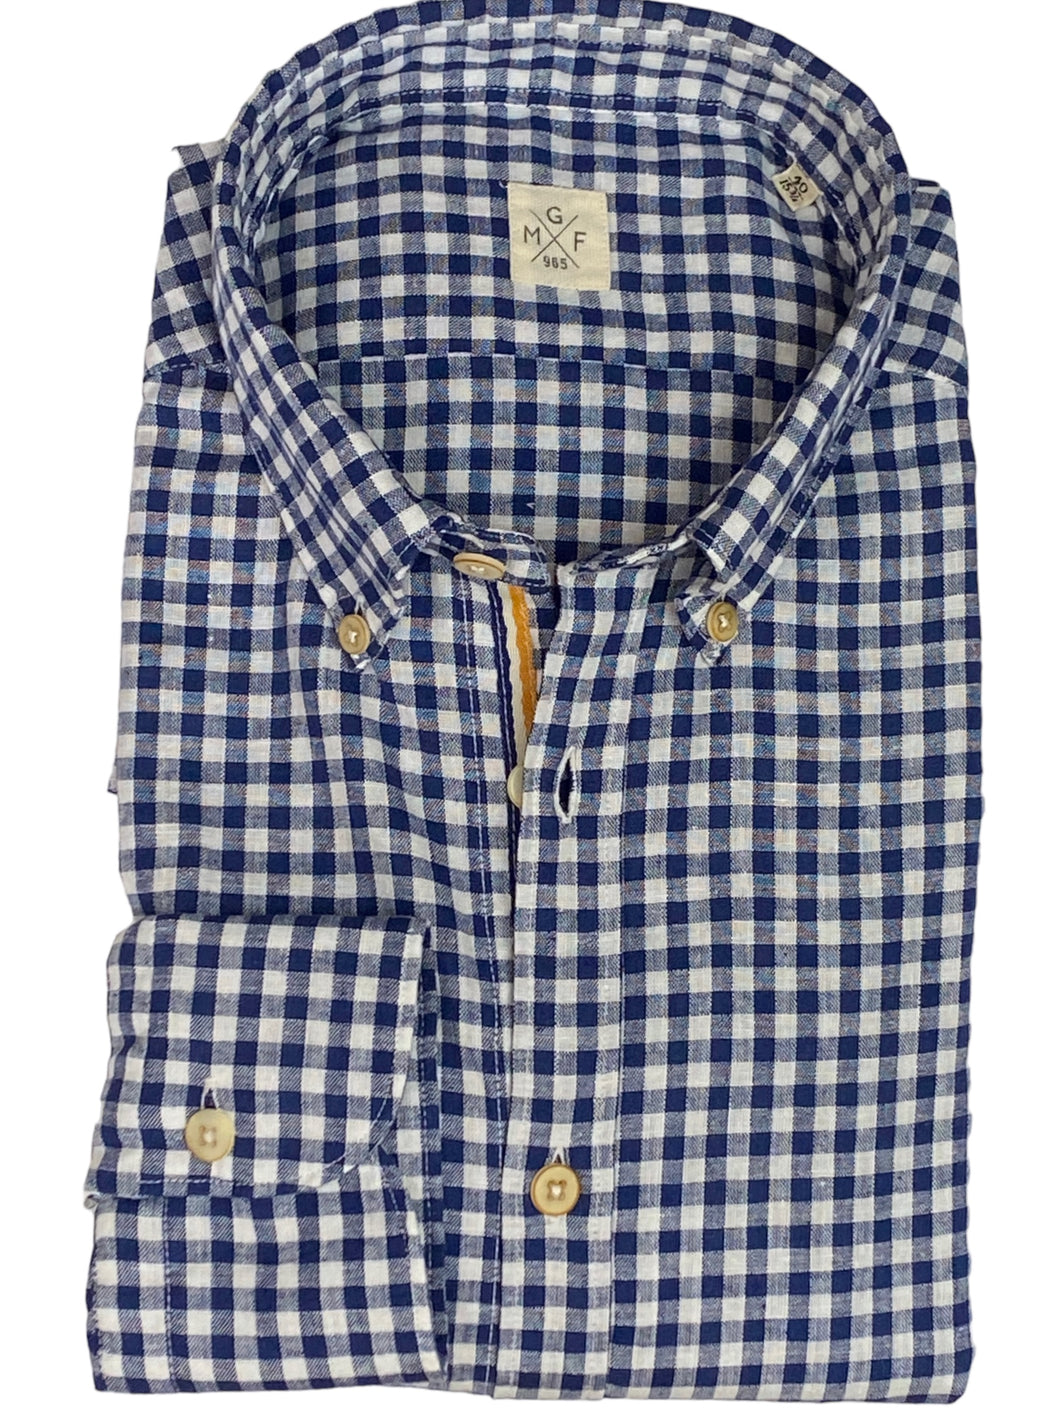 GMF 965 Linen/Cotton Gingham Shirt Blue